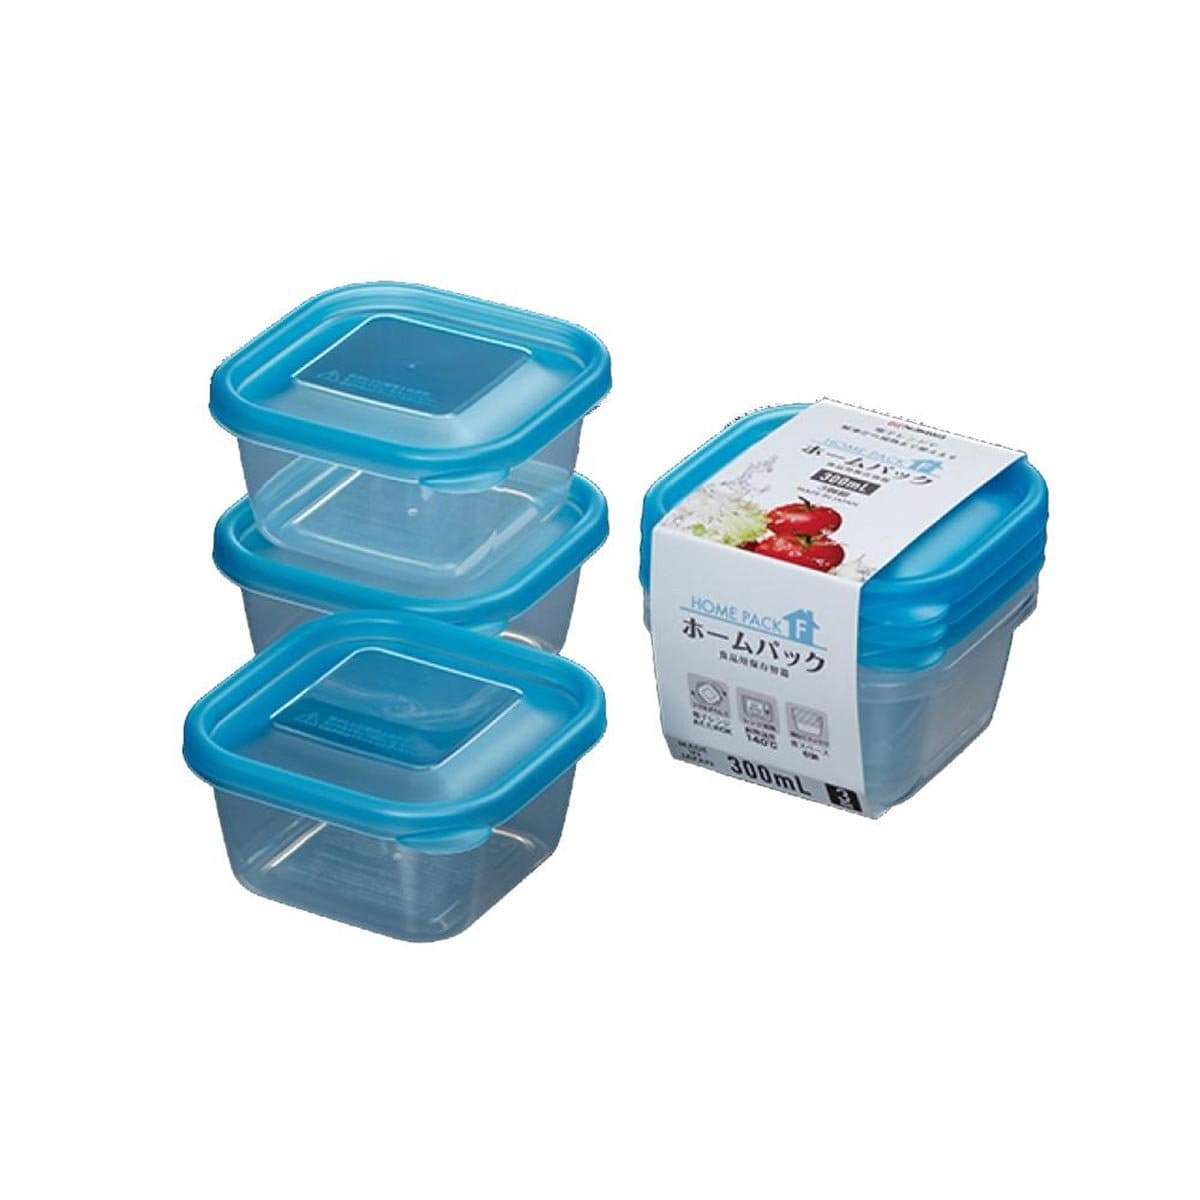 Japanese Plastic Food Storage Container Homepack F (300ml x 3p)